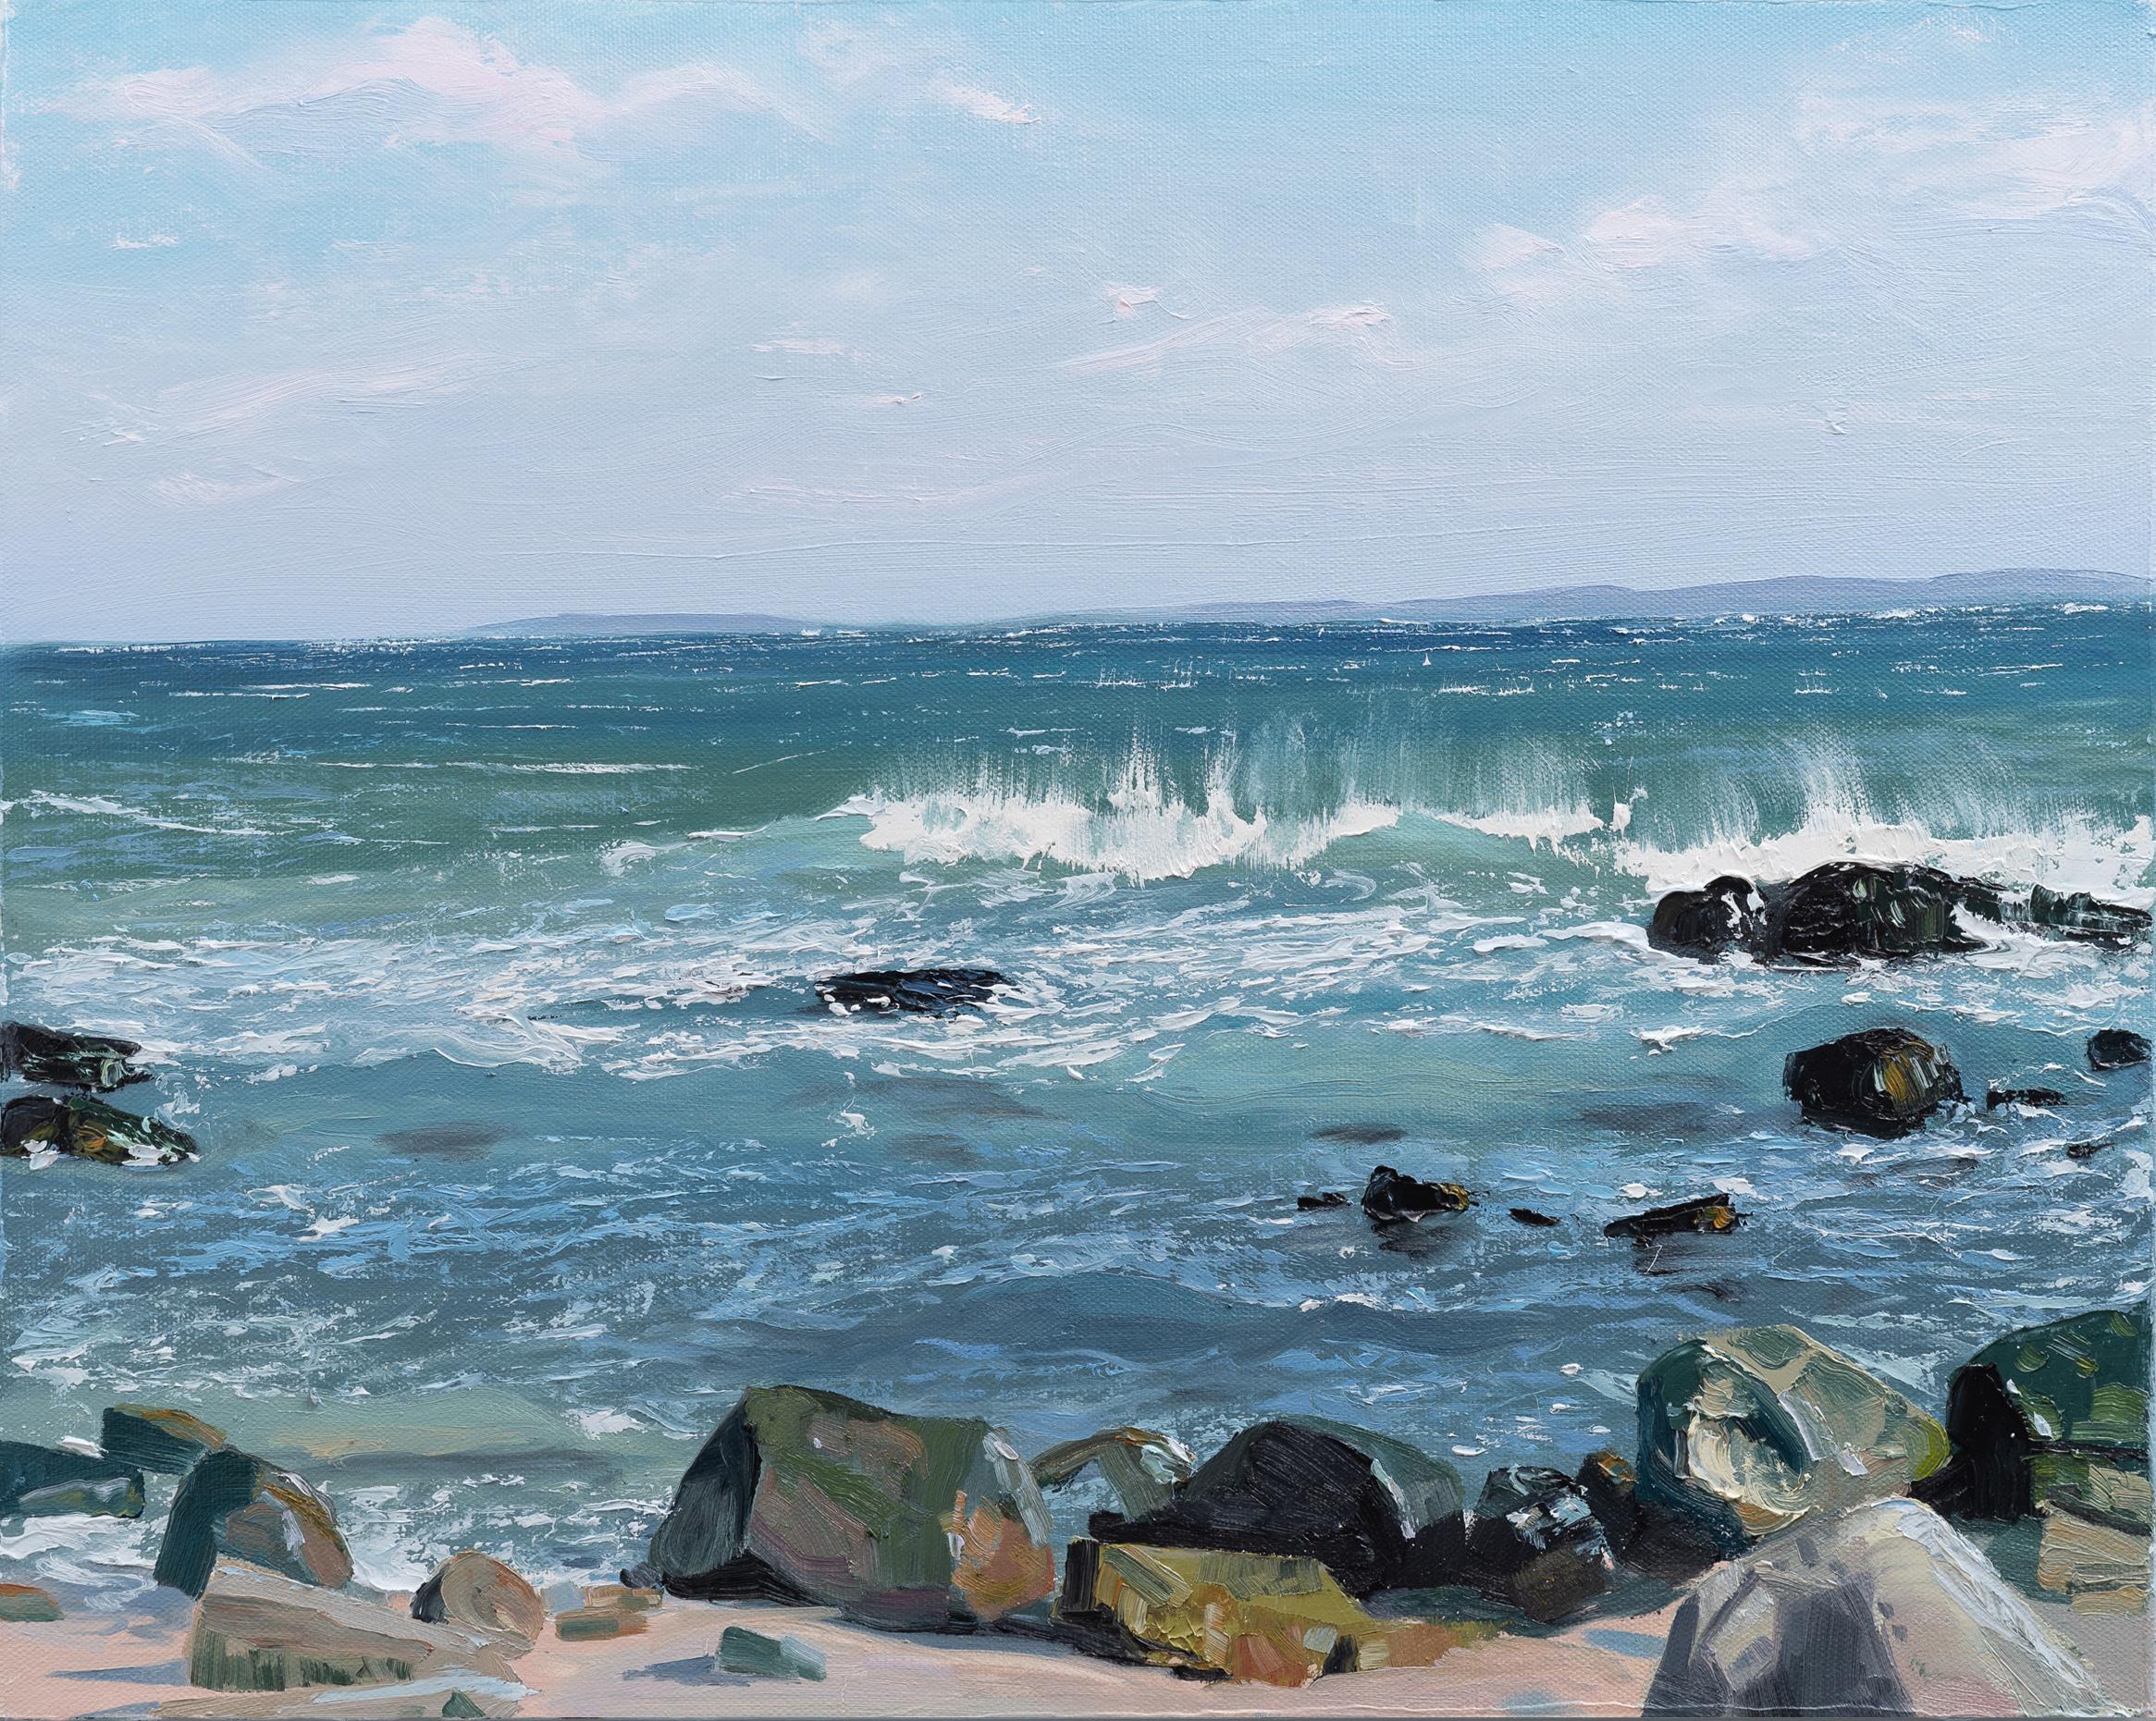 Annie Wildey Landscape Painting - "Summer Rocks n' Surf IV" oil painting of waves crashing on rocks in the ocean